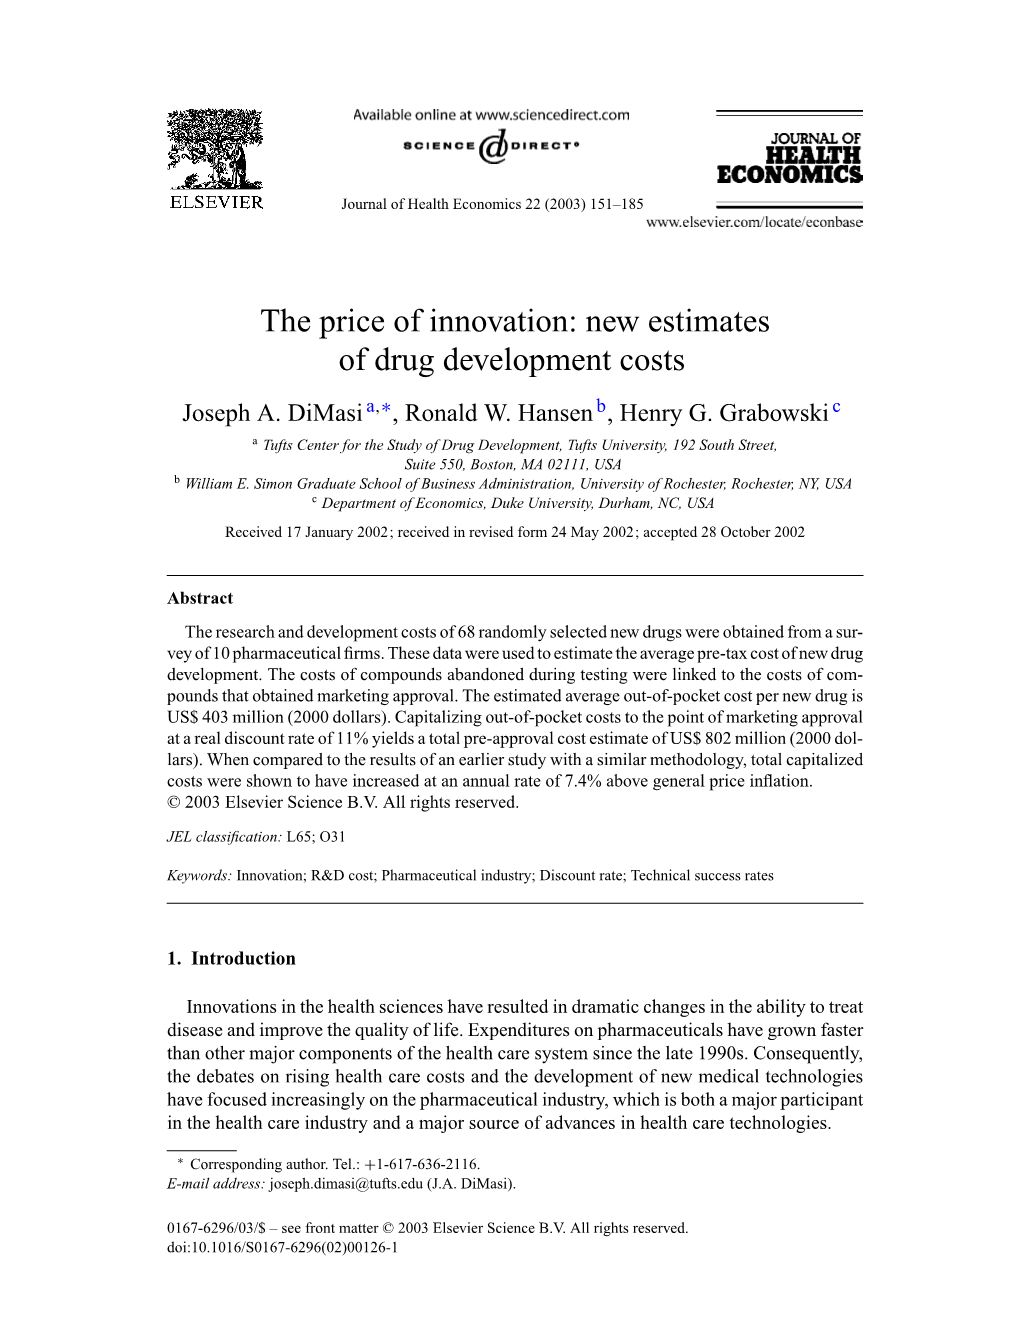 The Price of Innovation: New Estimates of Drug Development Costs Joseph A